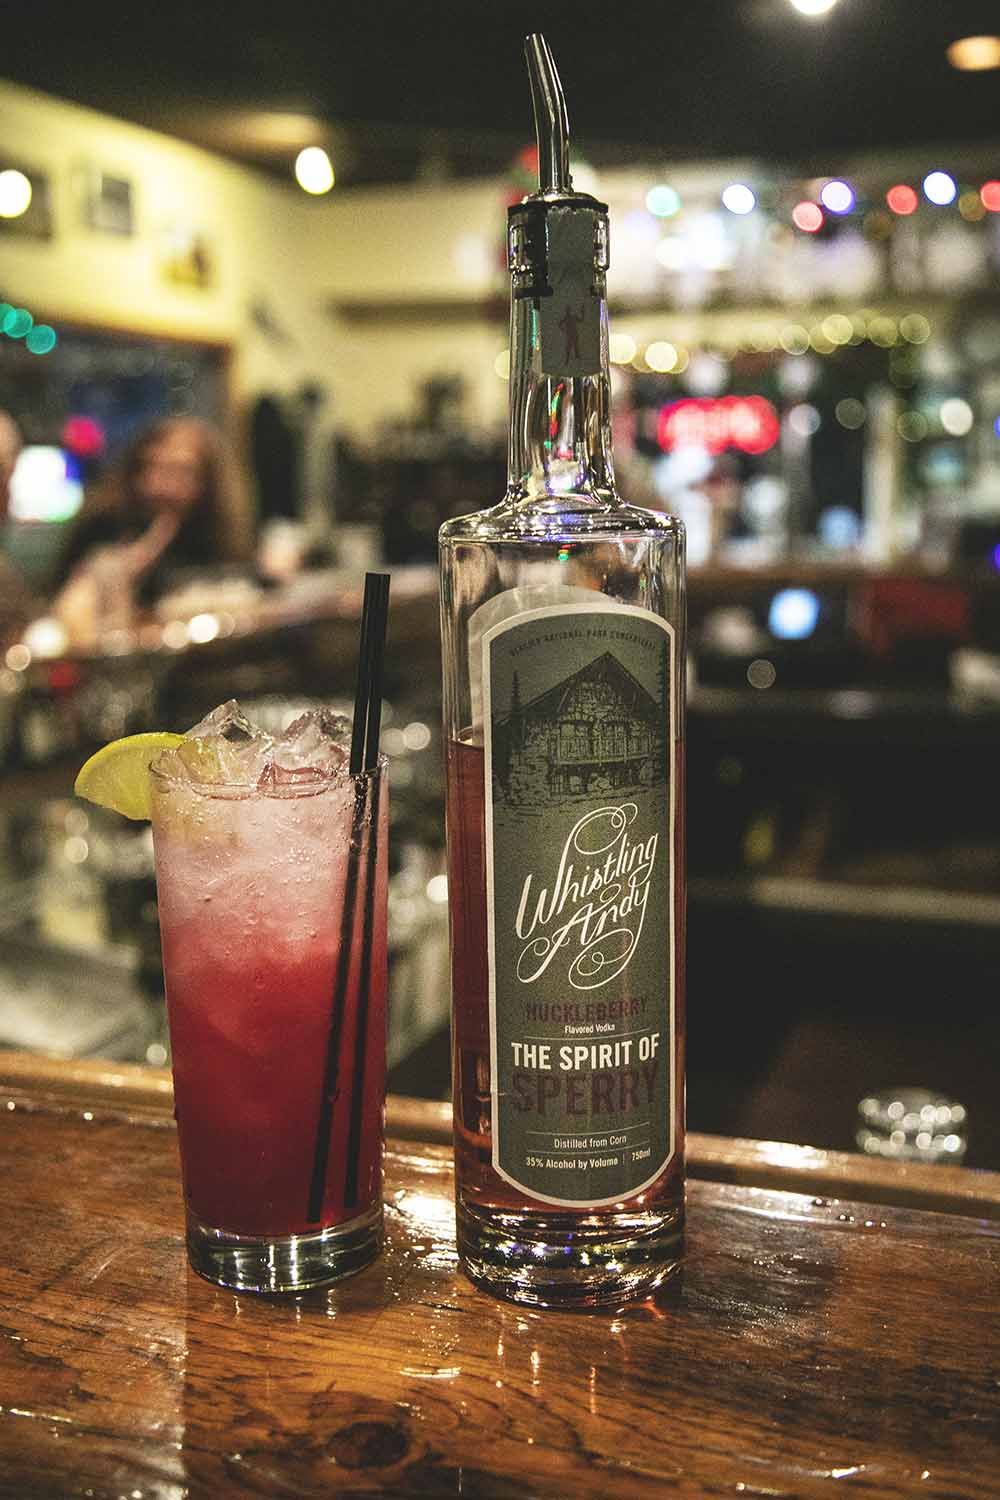 Huýt sáo Andy Distilling’s The Spirit of Sperry huckleberry vodka